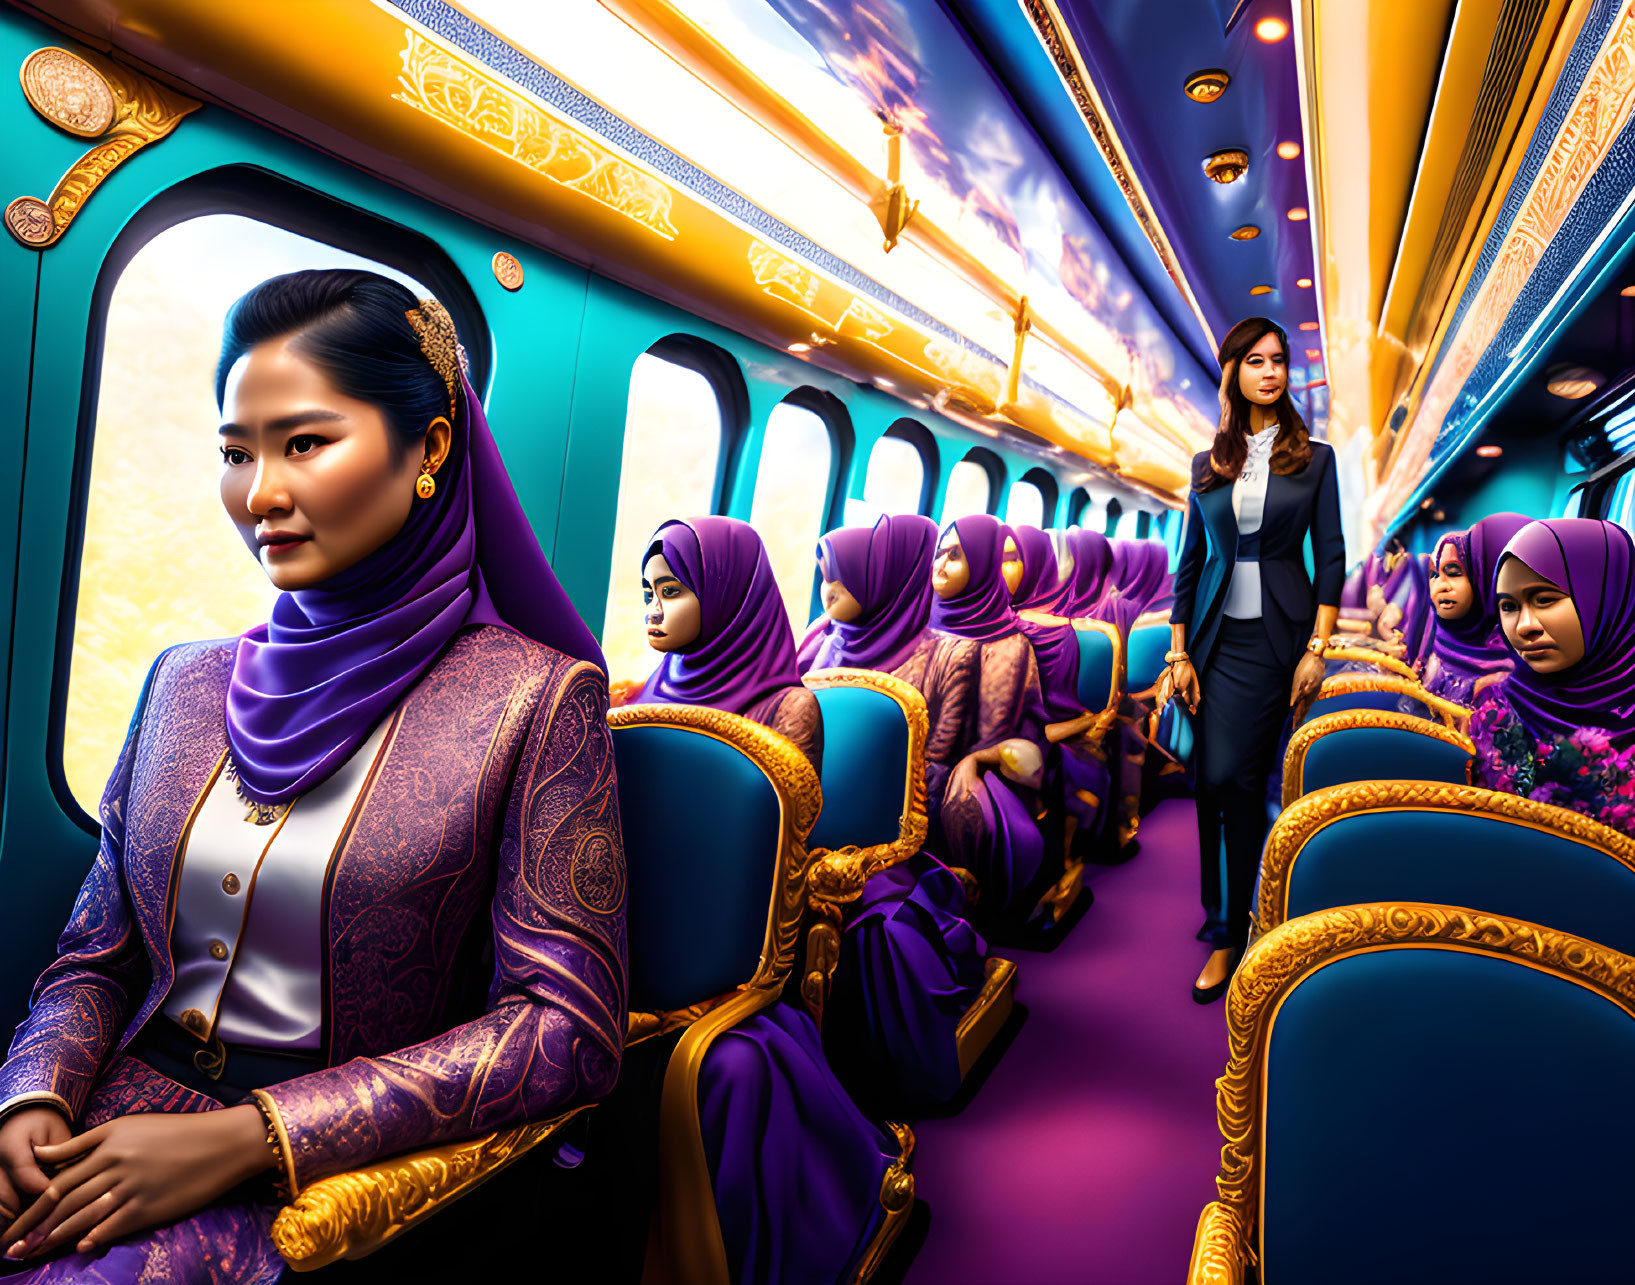 Digital Artwork: Women in Hijabs in Luxurious Train Carriage